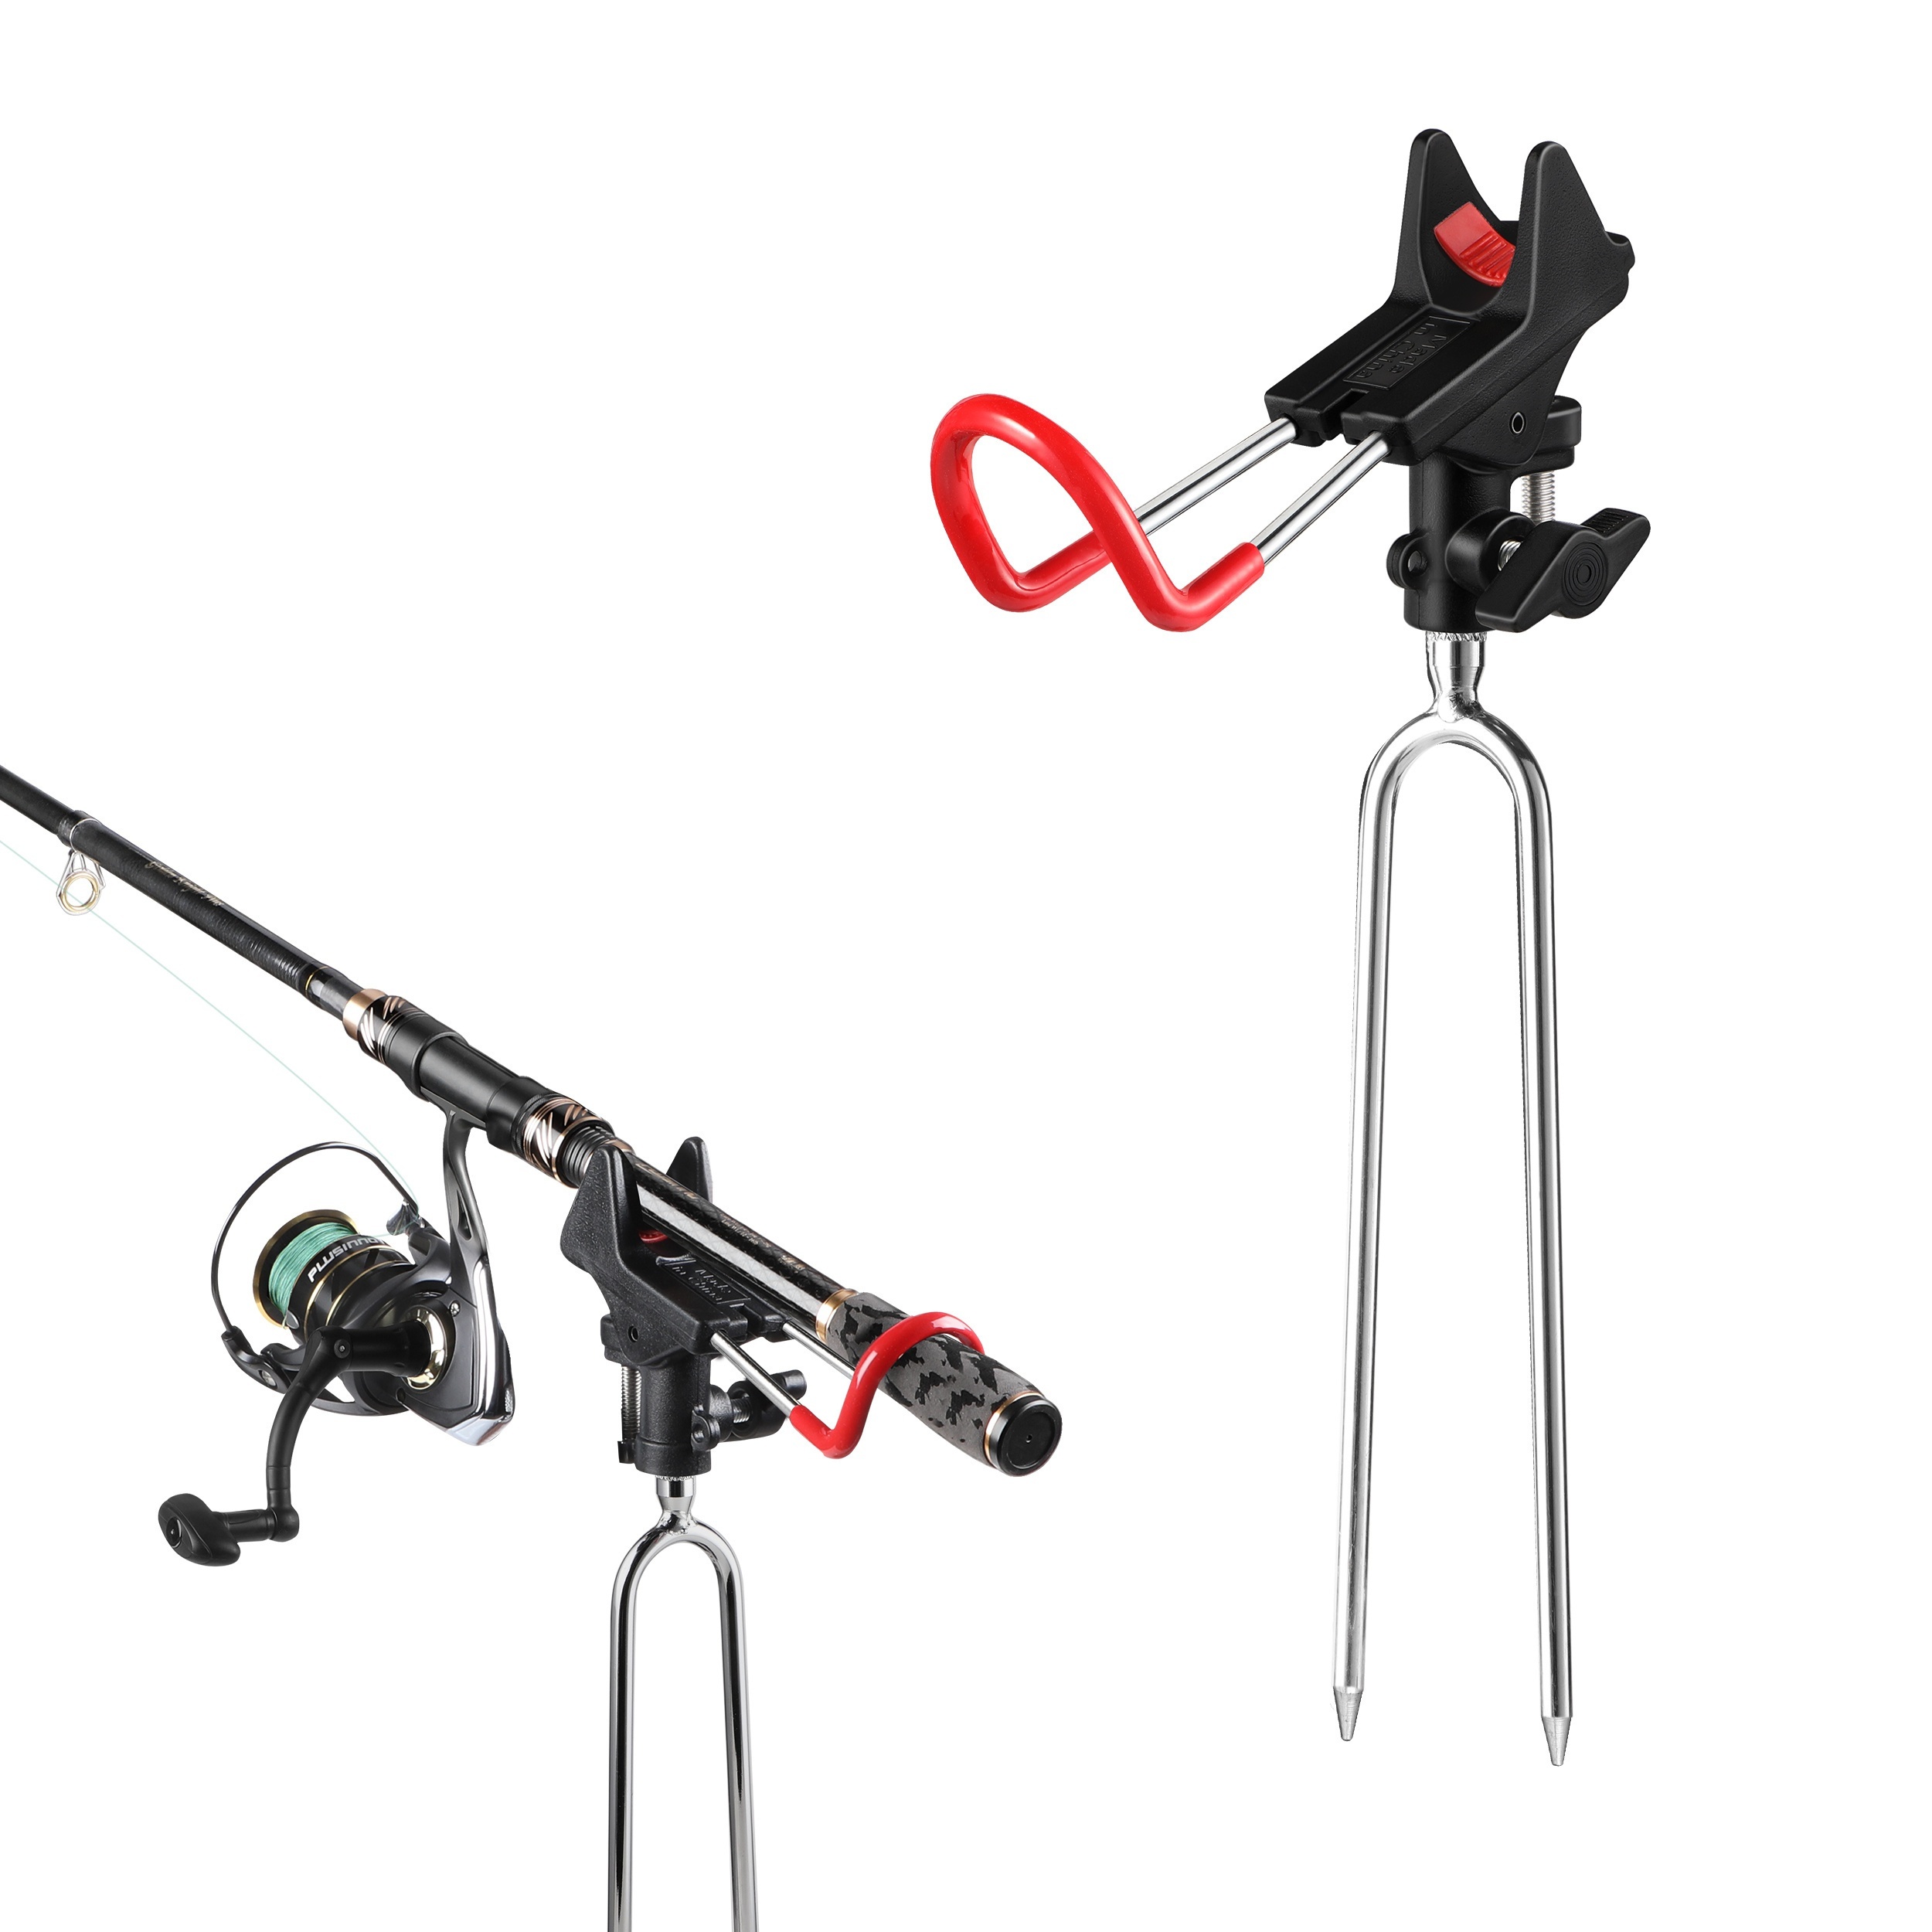 Mikewe 2 Pack-Rod Pole Holders For Bank Fishing,fishing Rod Holder Ground,360 Degree Adjustable,folding Catfishing Equipment